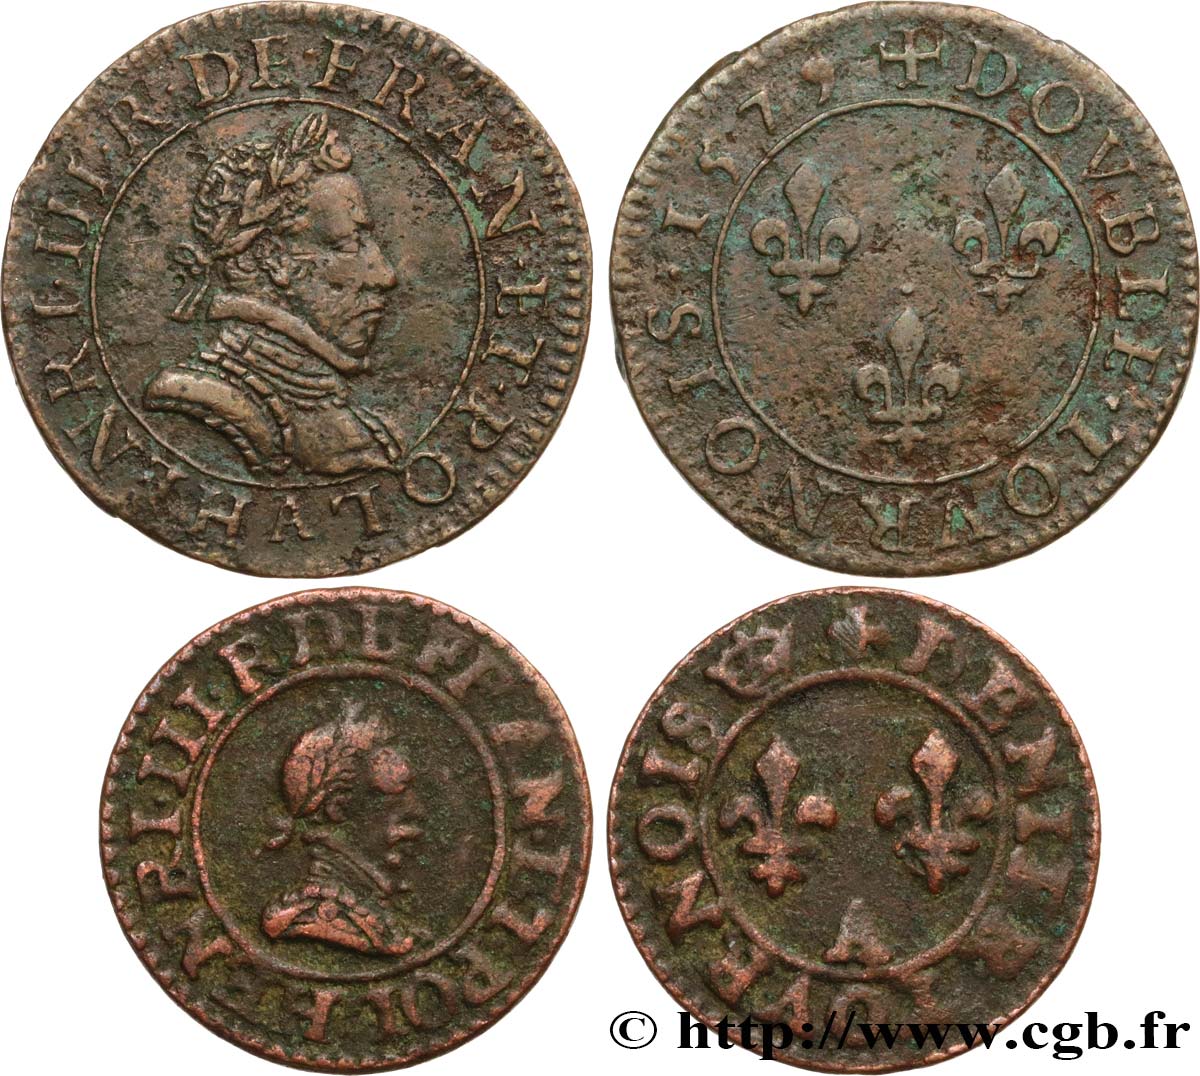 HENRY III Lot de 2 monnaies royales n.d. Ateliers divers VF